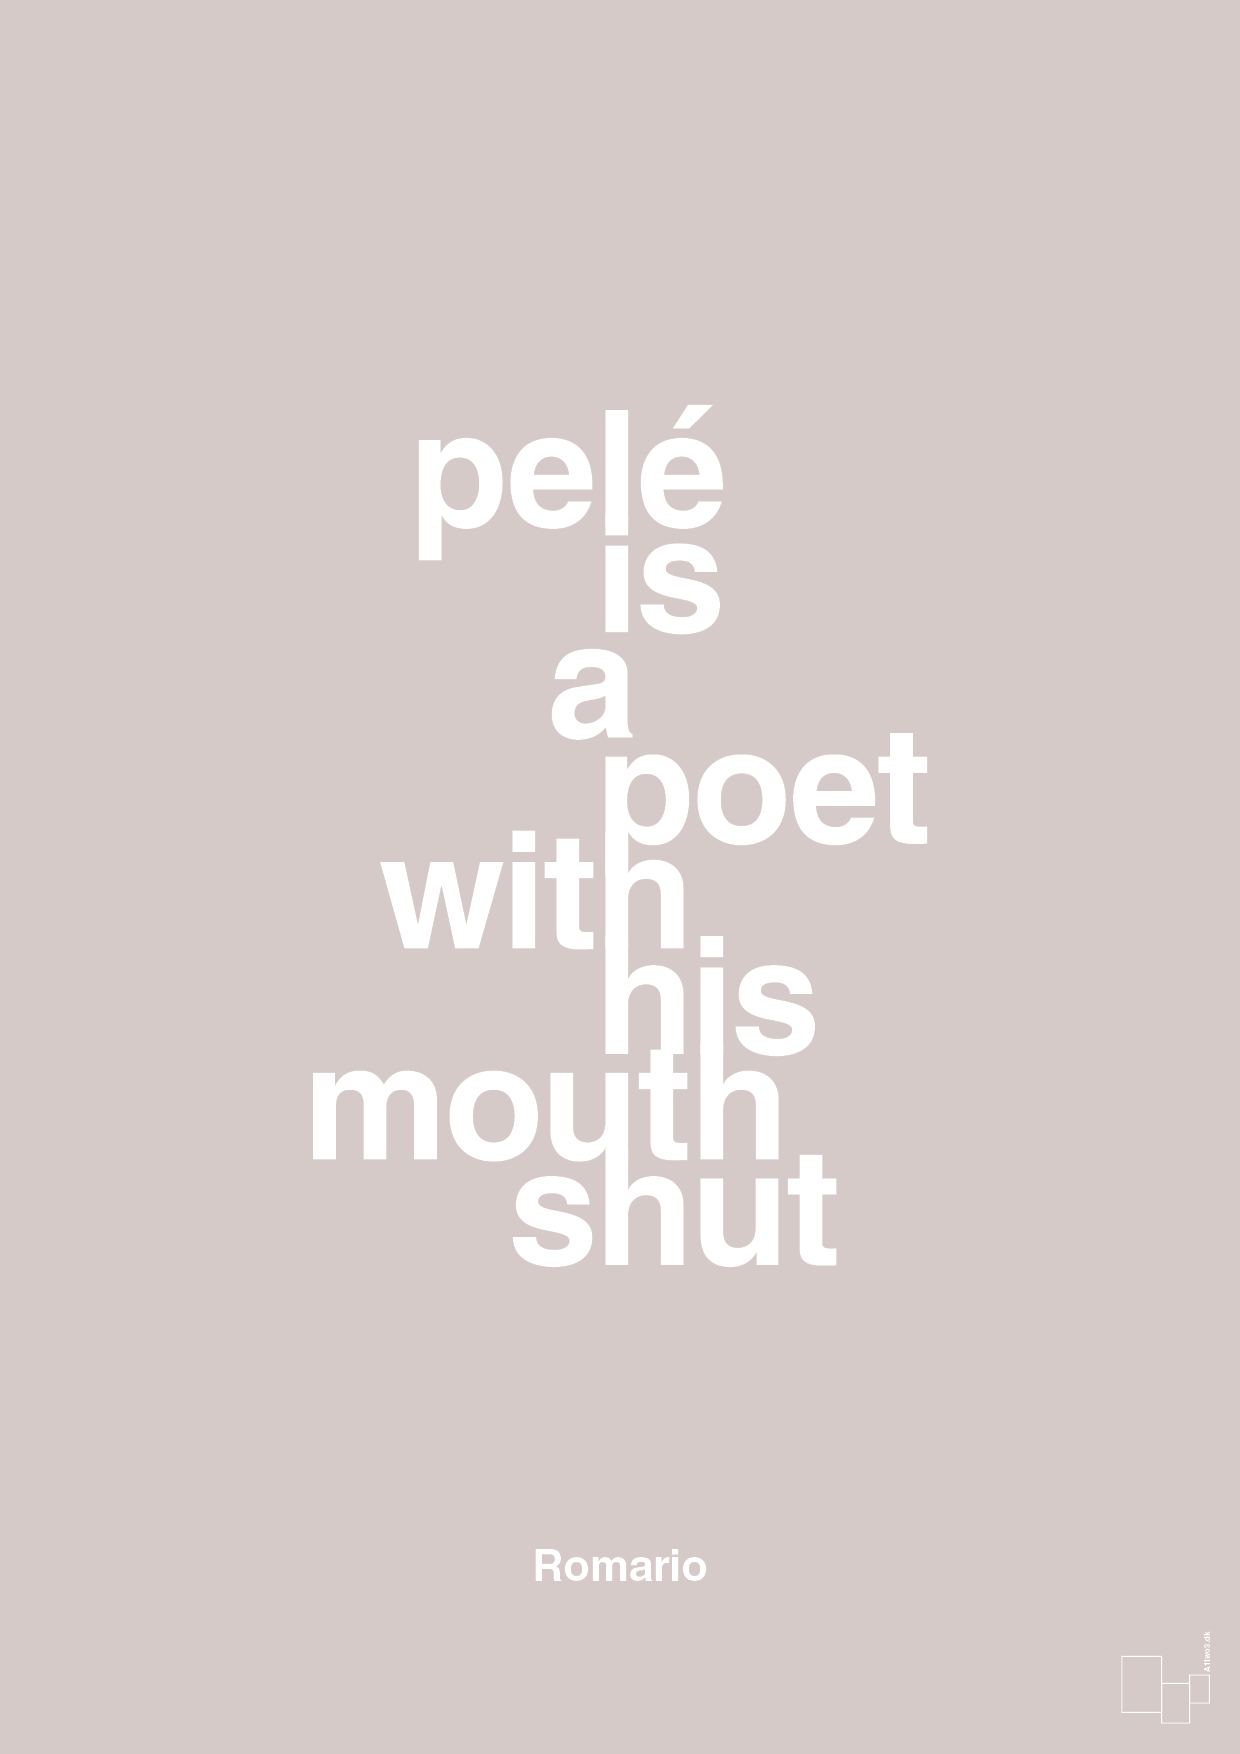 pelé is a poet with his mouth shut - Plakat med Citater i Broken Beige